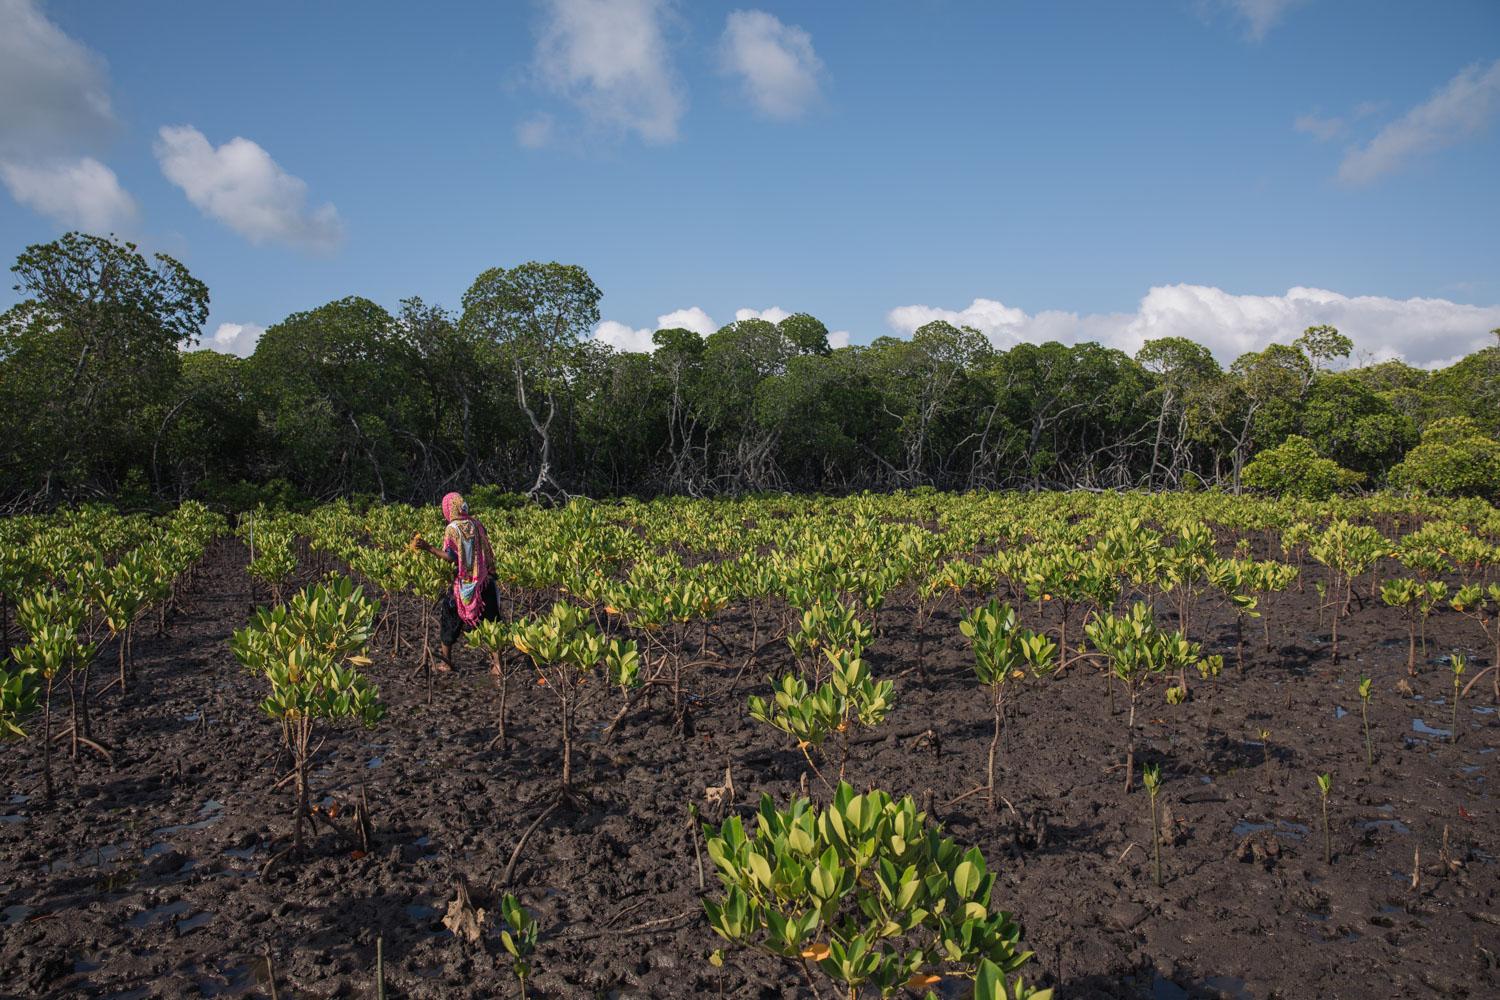 Zulfa inspects the Mkoko (local name) plantation at the Mangrove restoration site in Mtangawanda, Lamu. Lamu Kenya